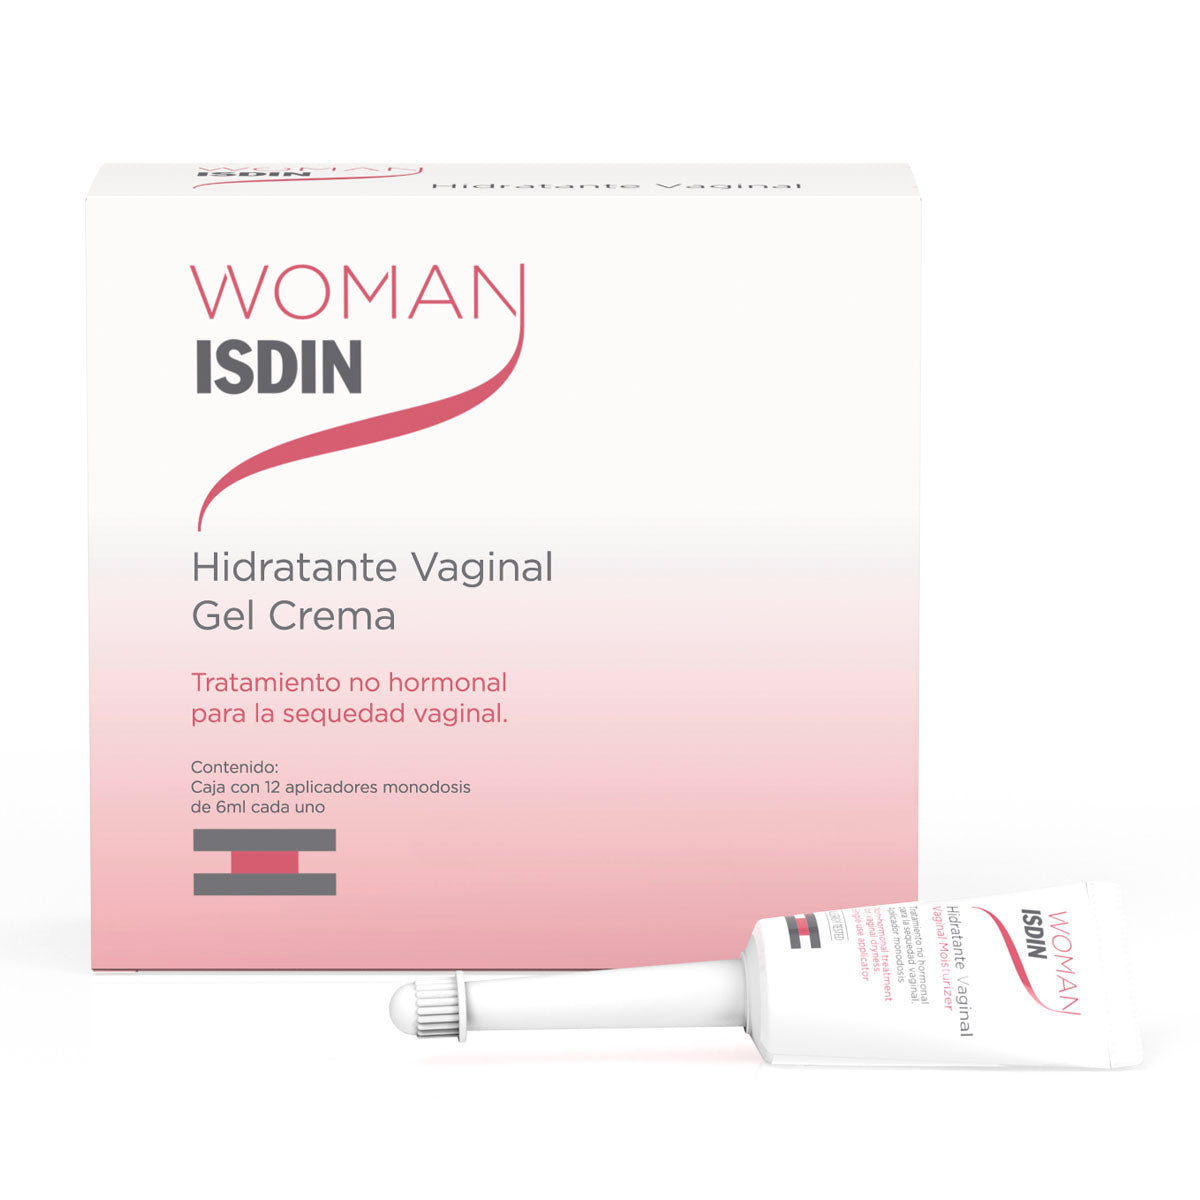 Hidratante vaginal woman c/12.